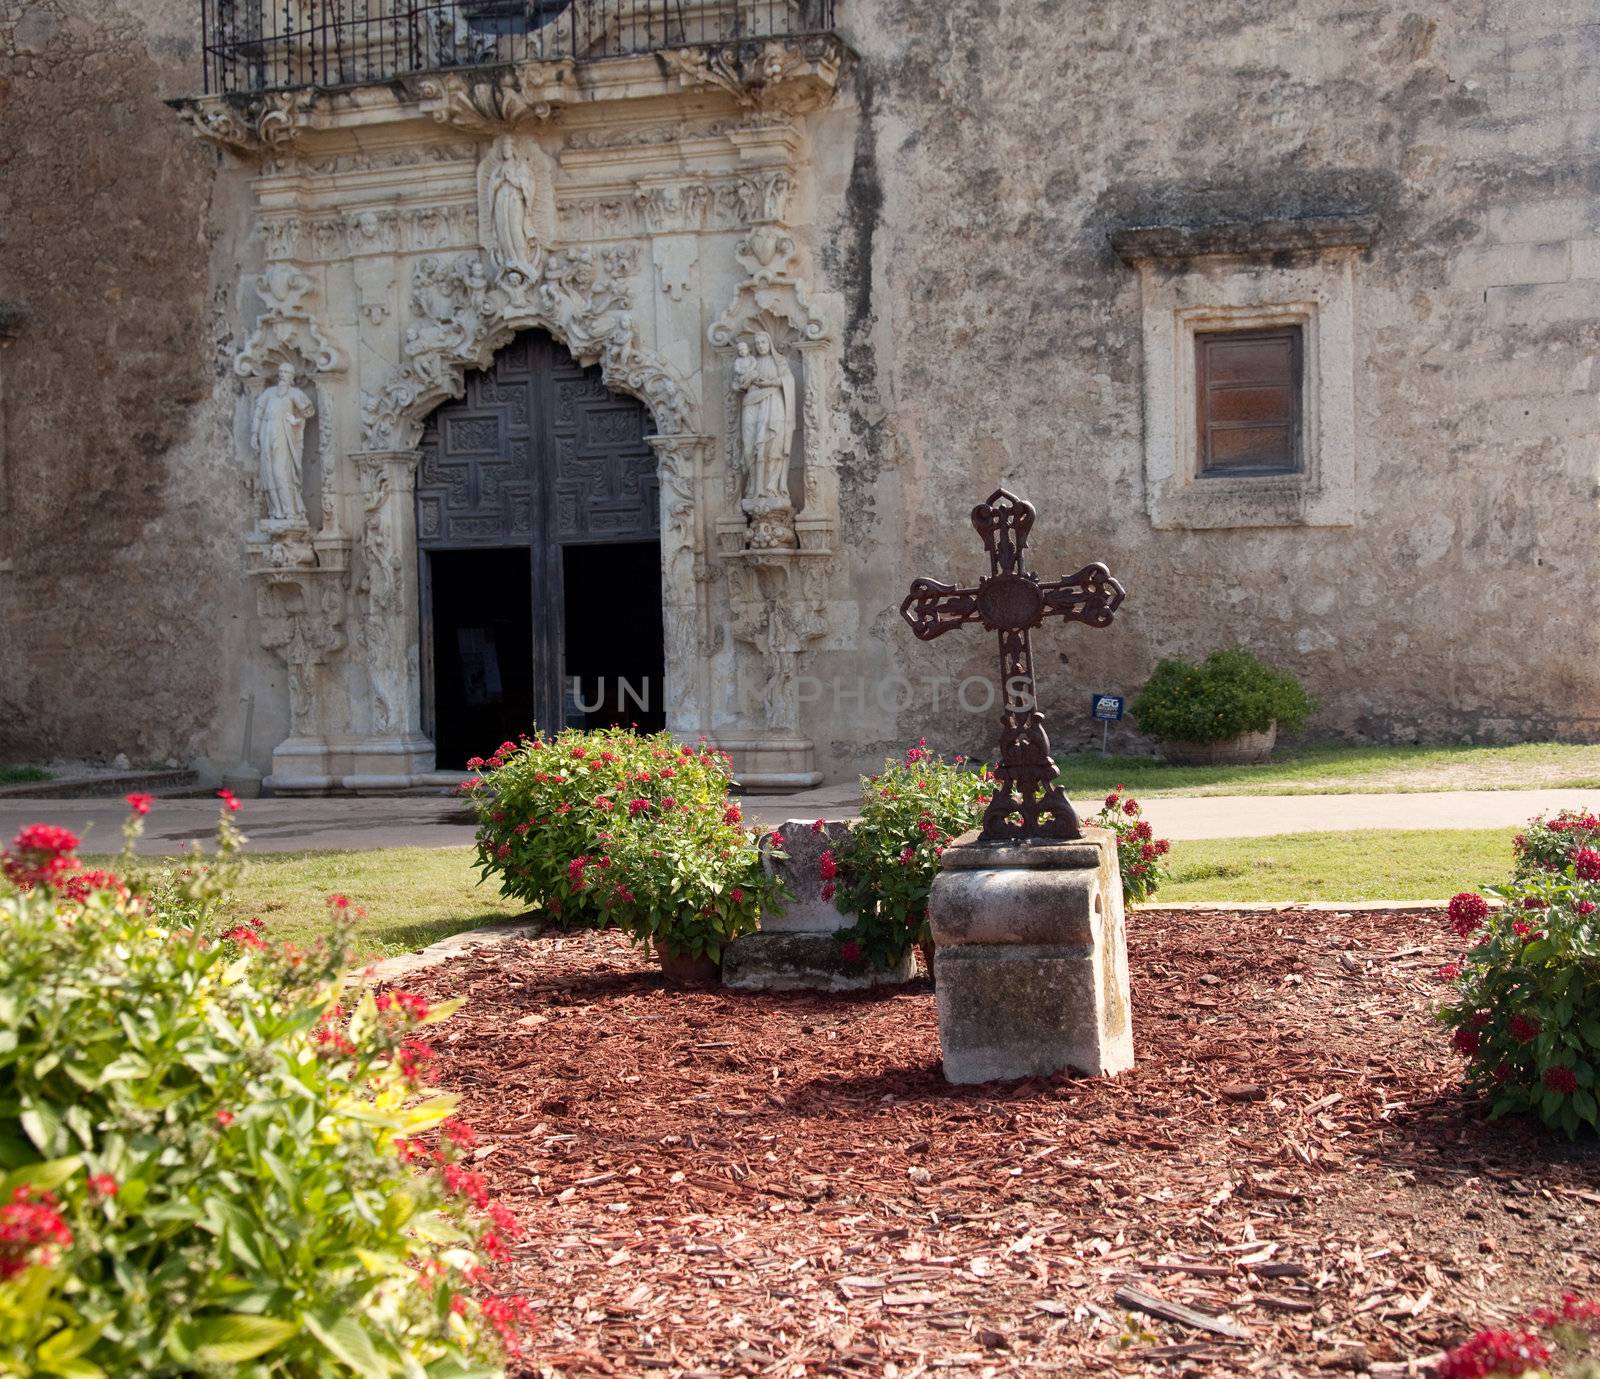 San Antonio Mission San Juan in Texas by steheap